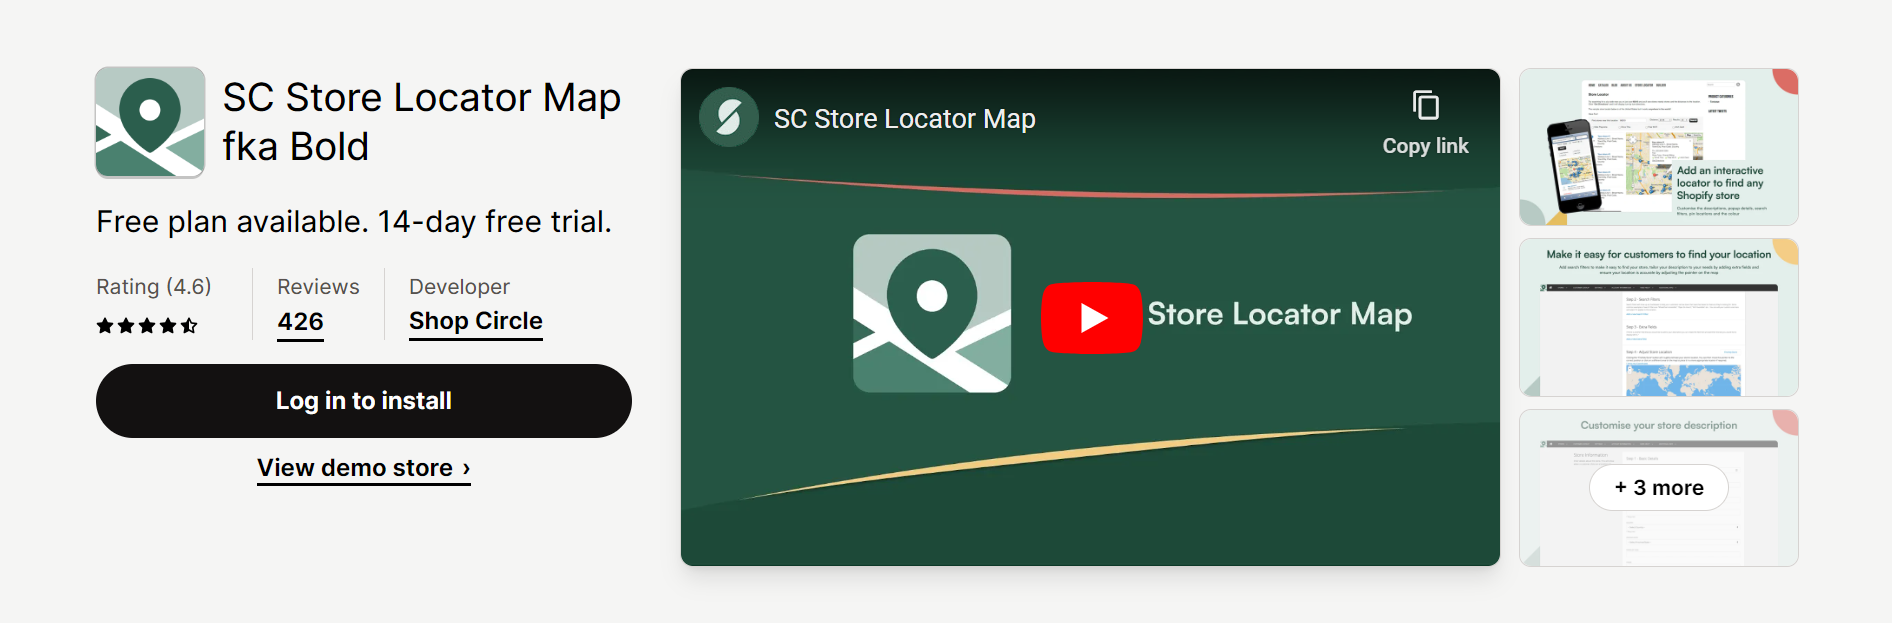 SC Store Locator Map fka Bold